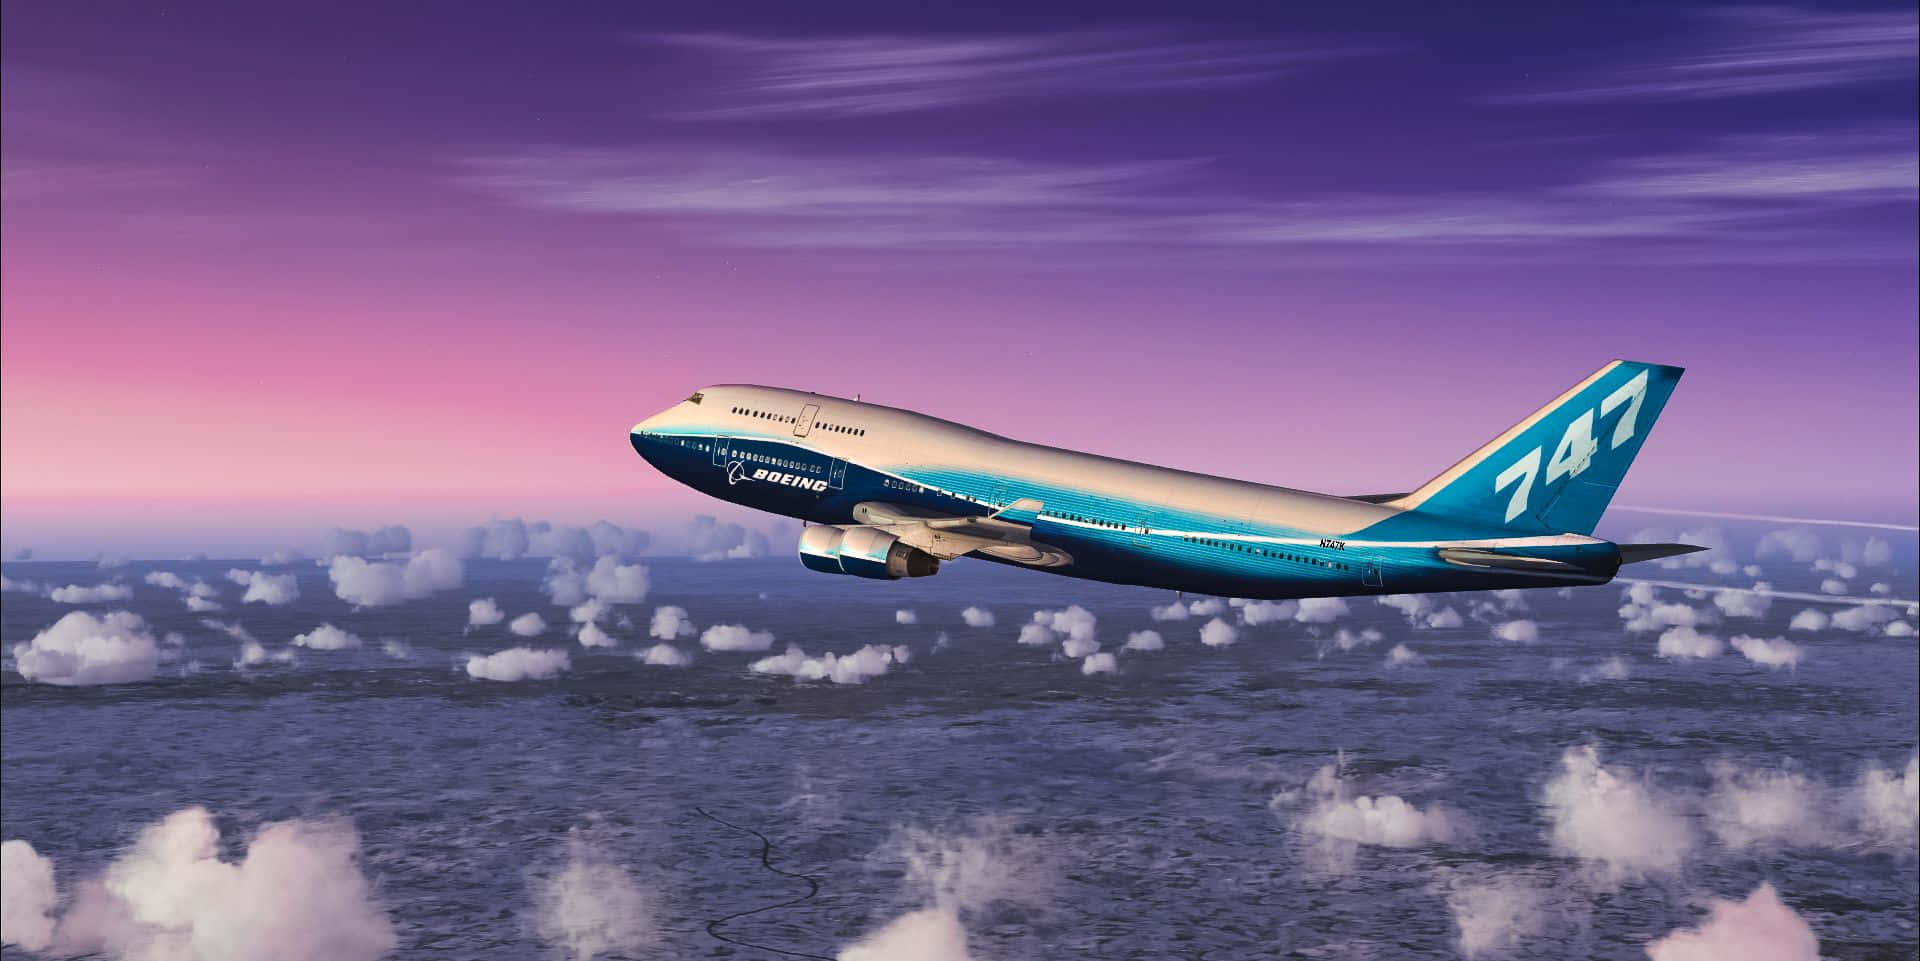 747 Airplane Wallpaper